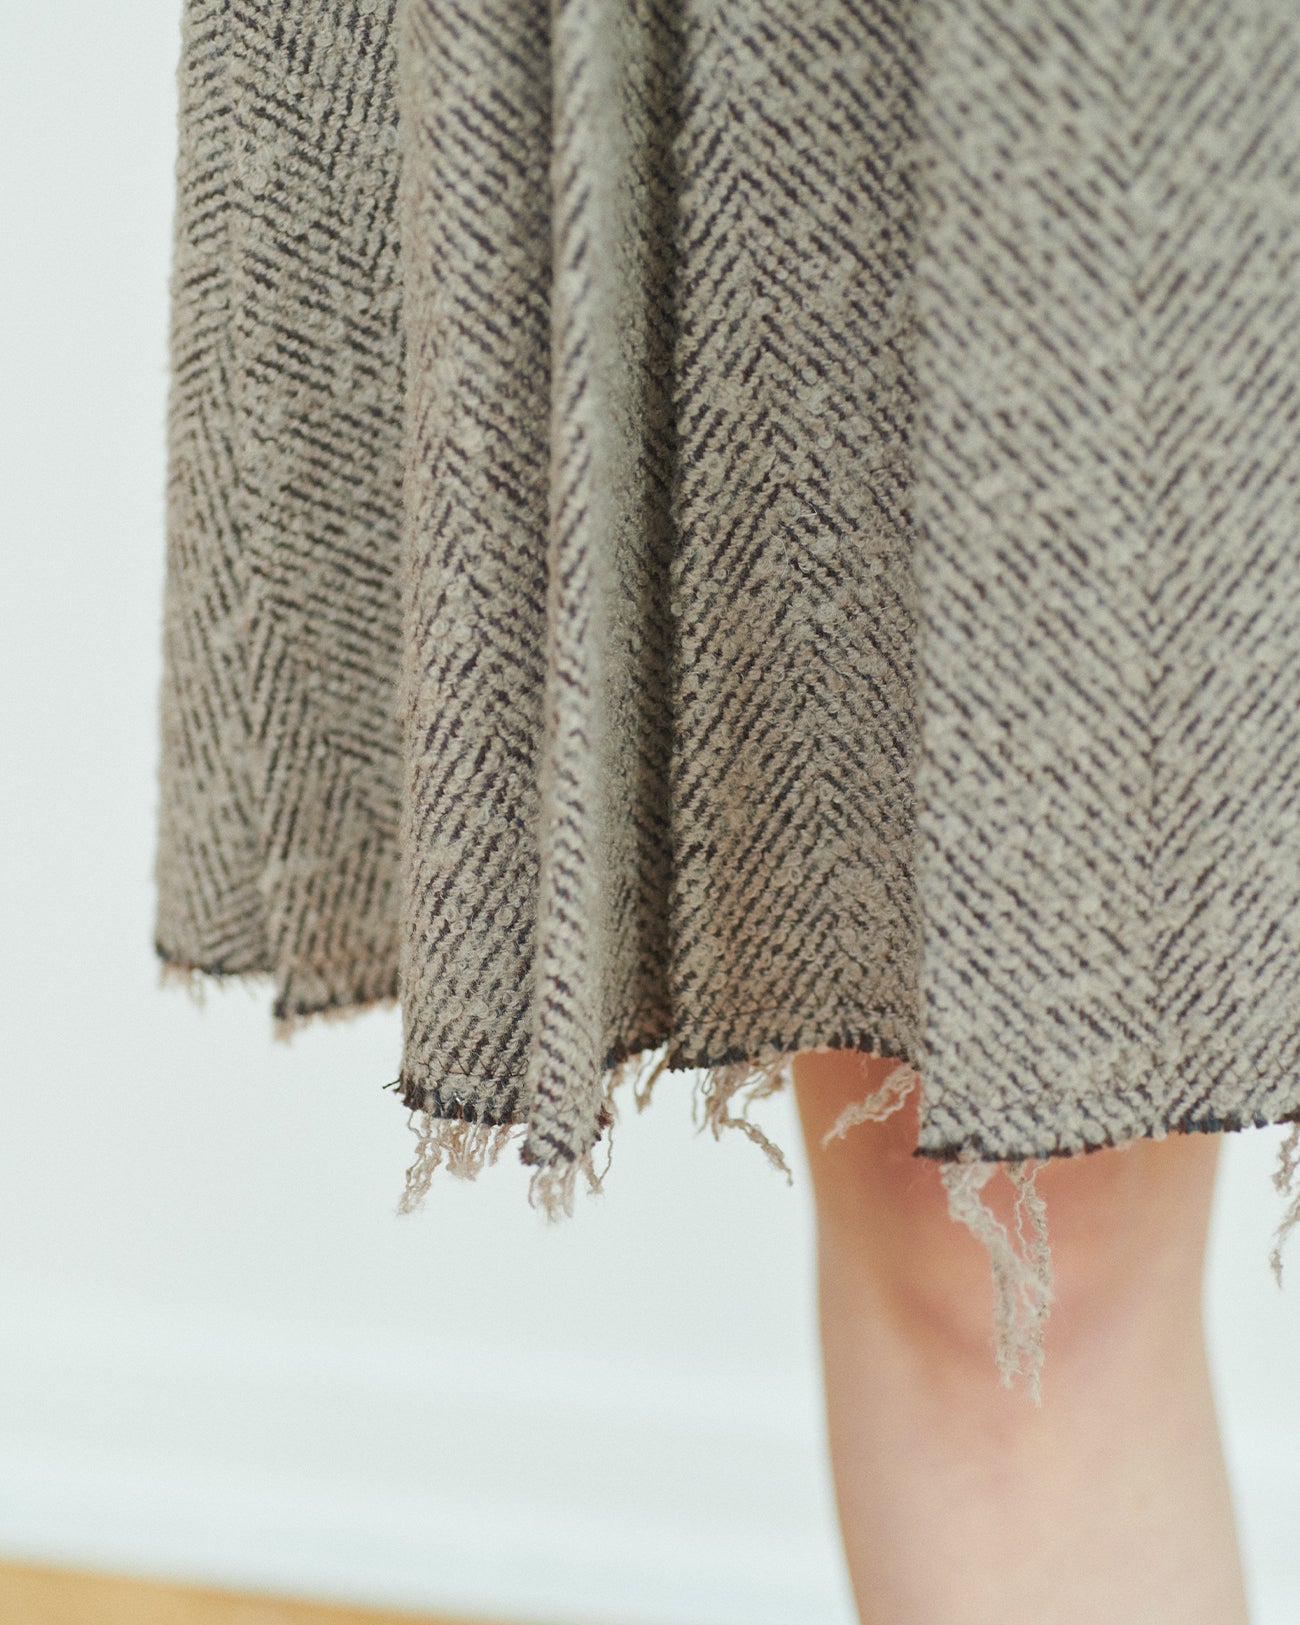 herringbone tackpleats skirt